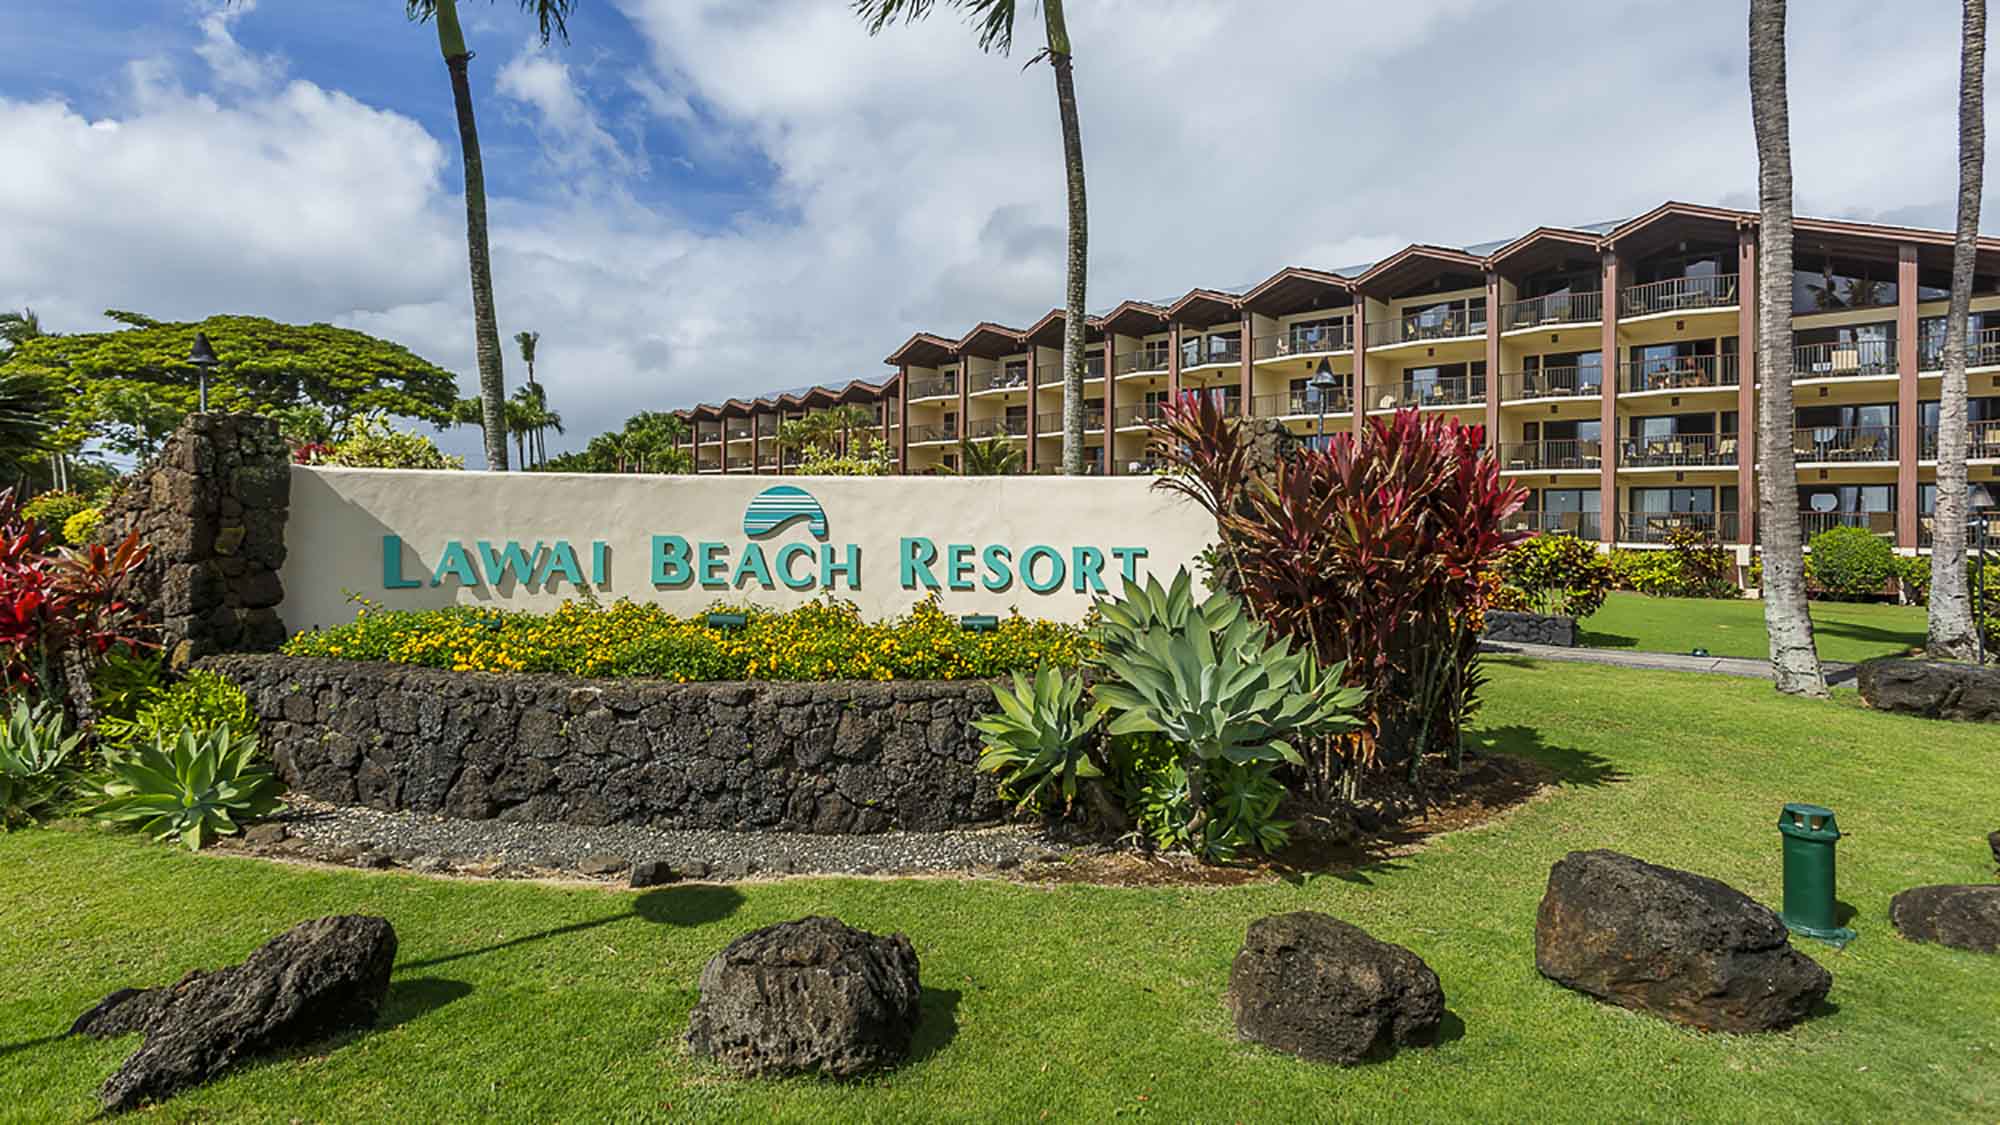 Lawai Beach Resort 2 - Parrish Kauai